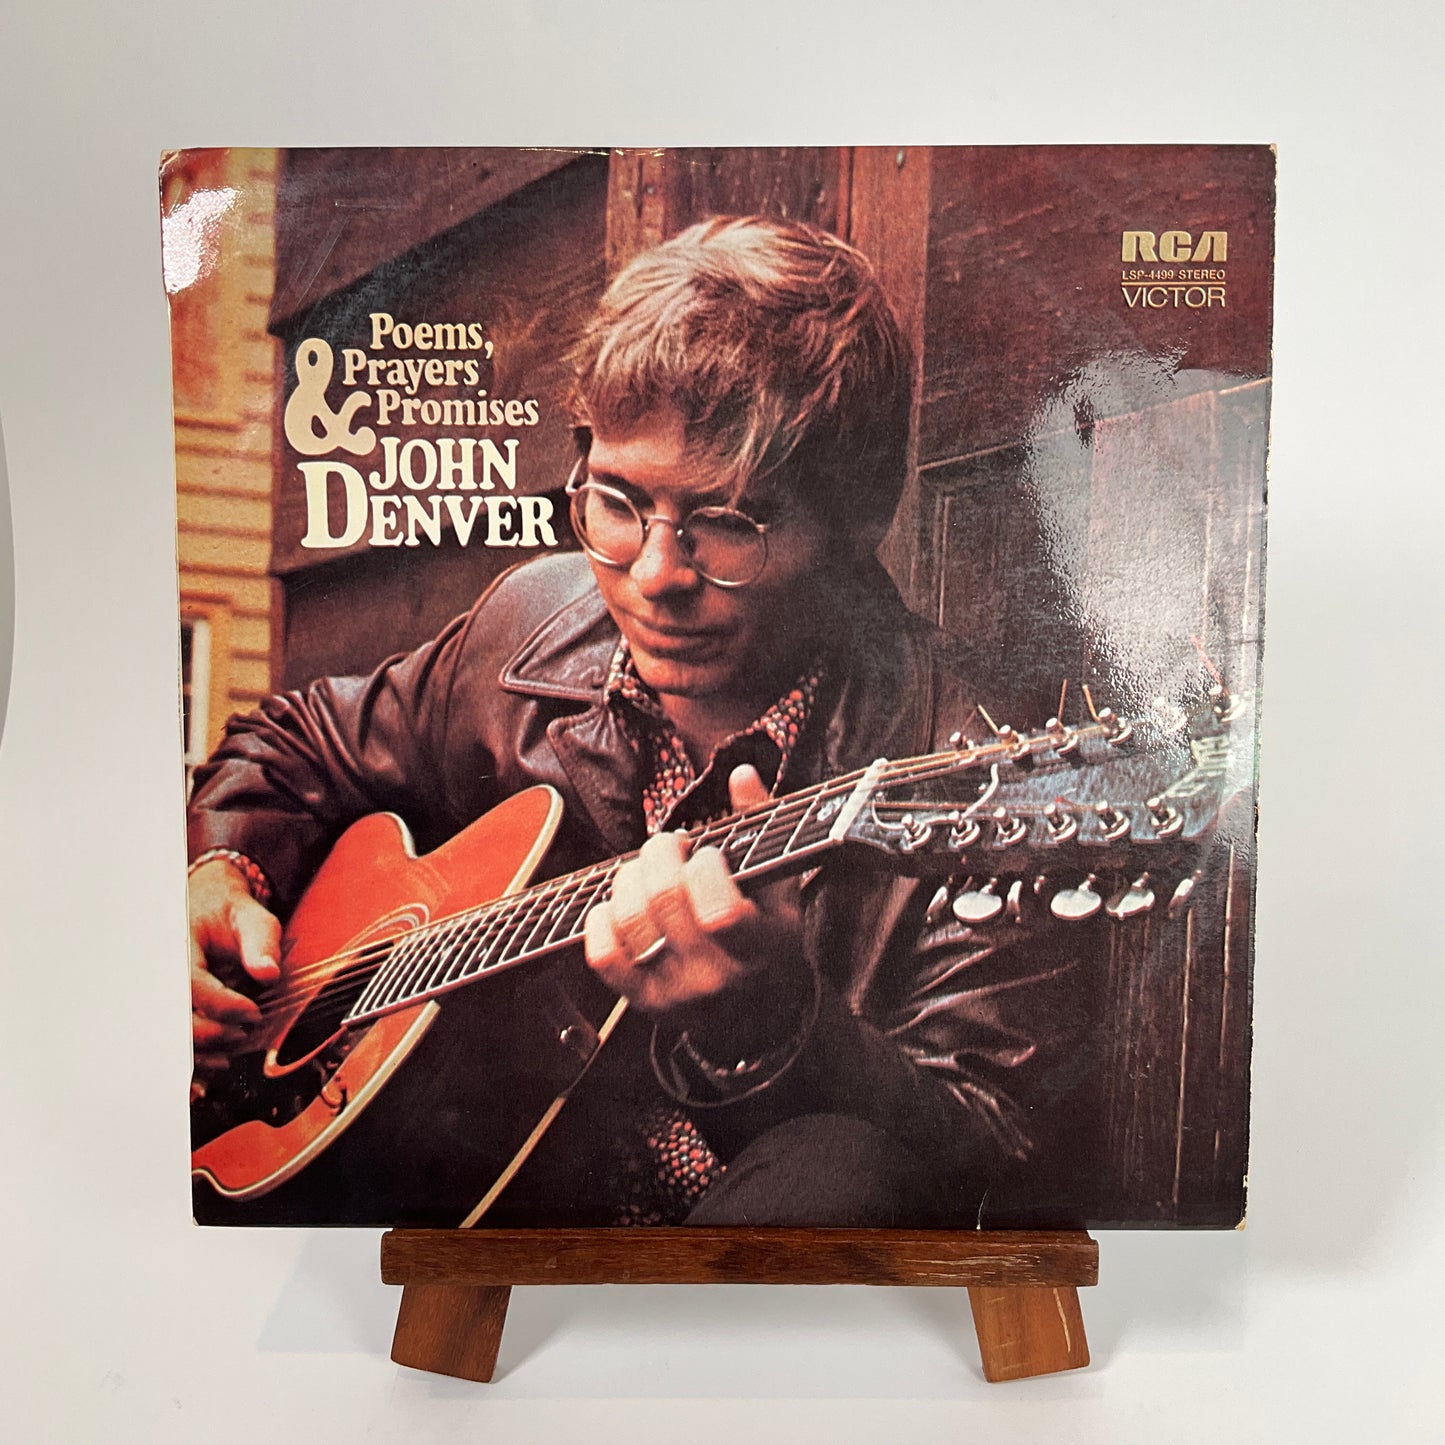 RCA Records - Poems, Prayers & Promises by John Denver